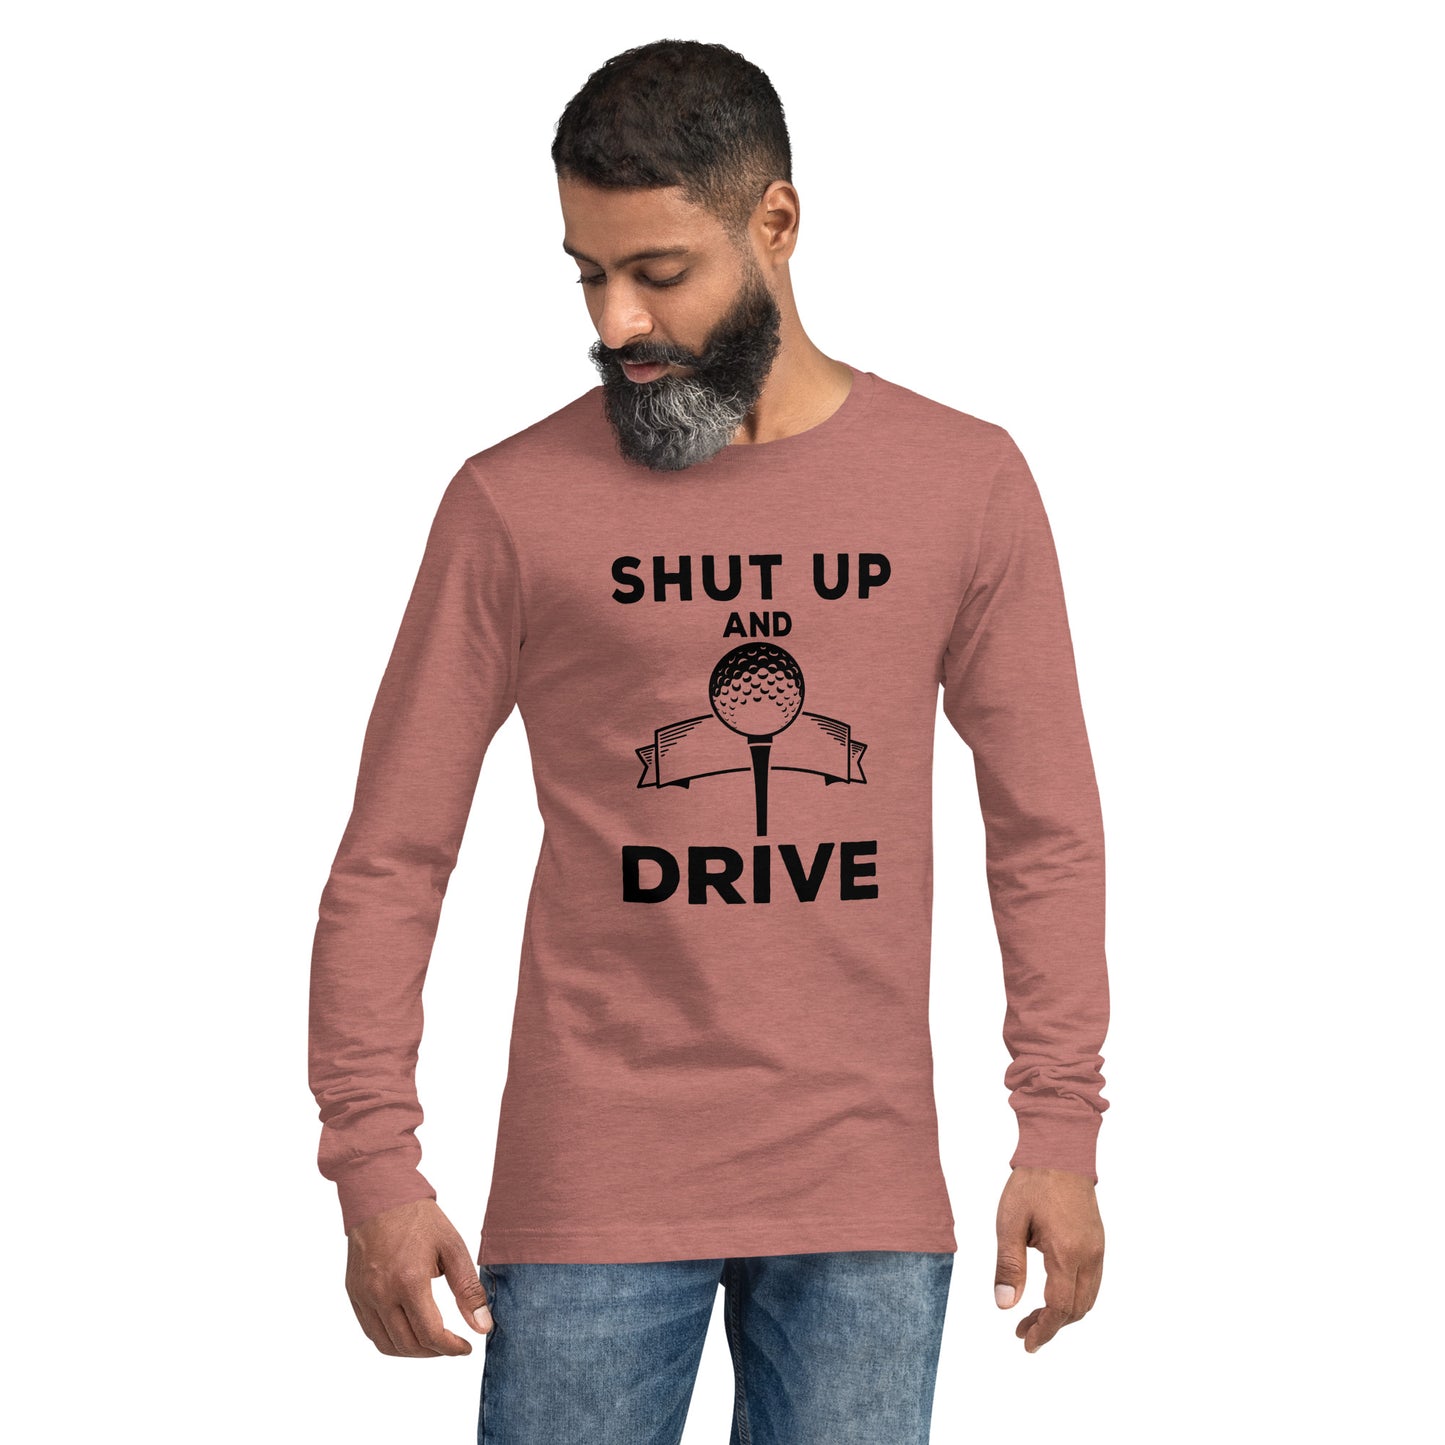 Shut Up and Drive Long Sleeve Shirt